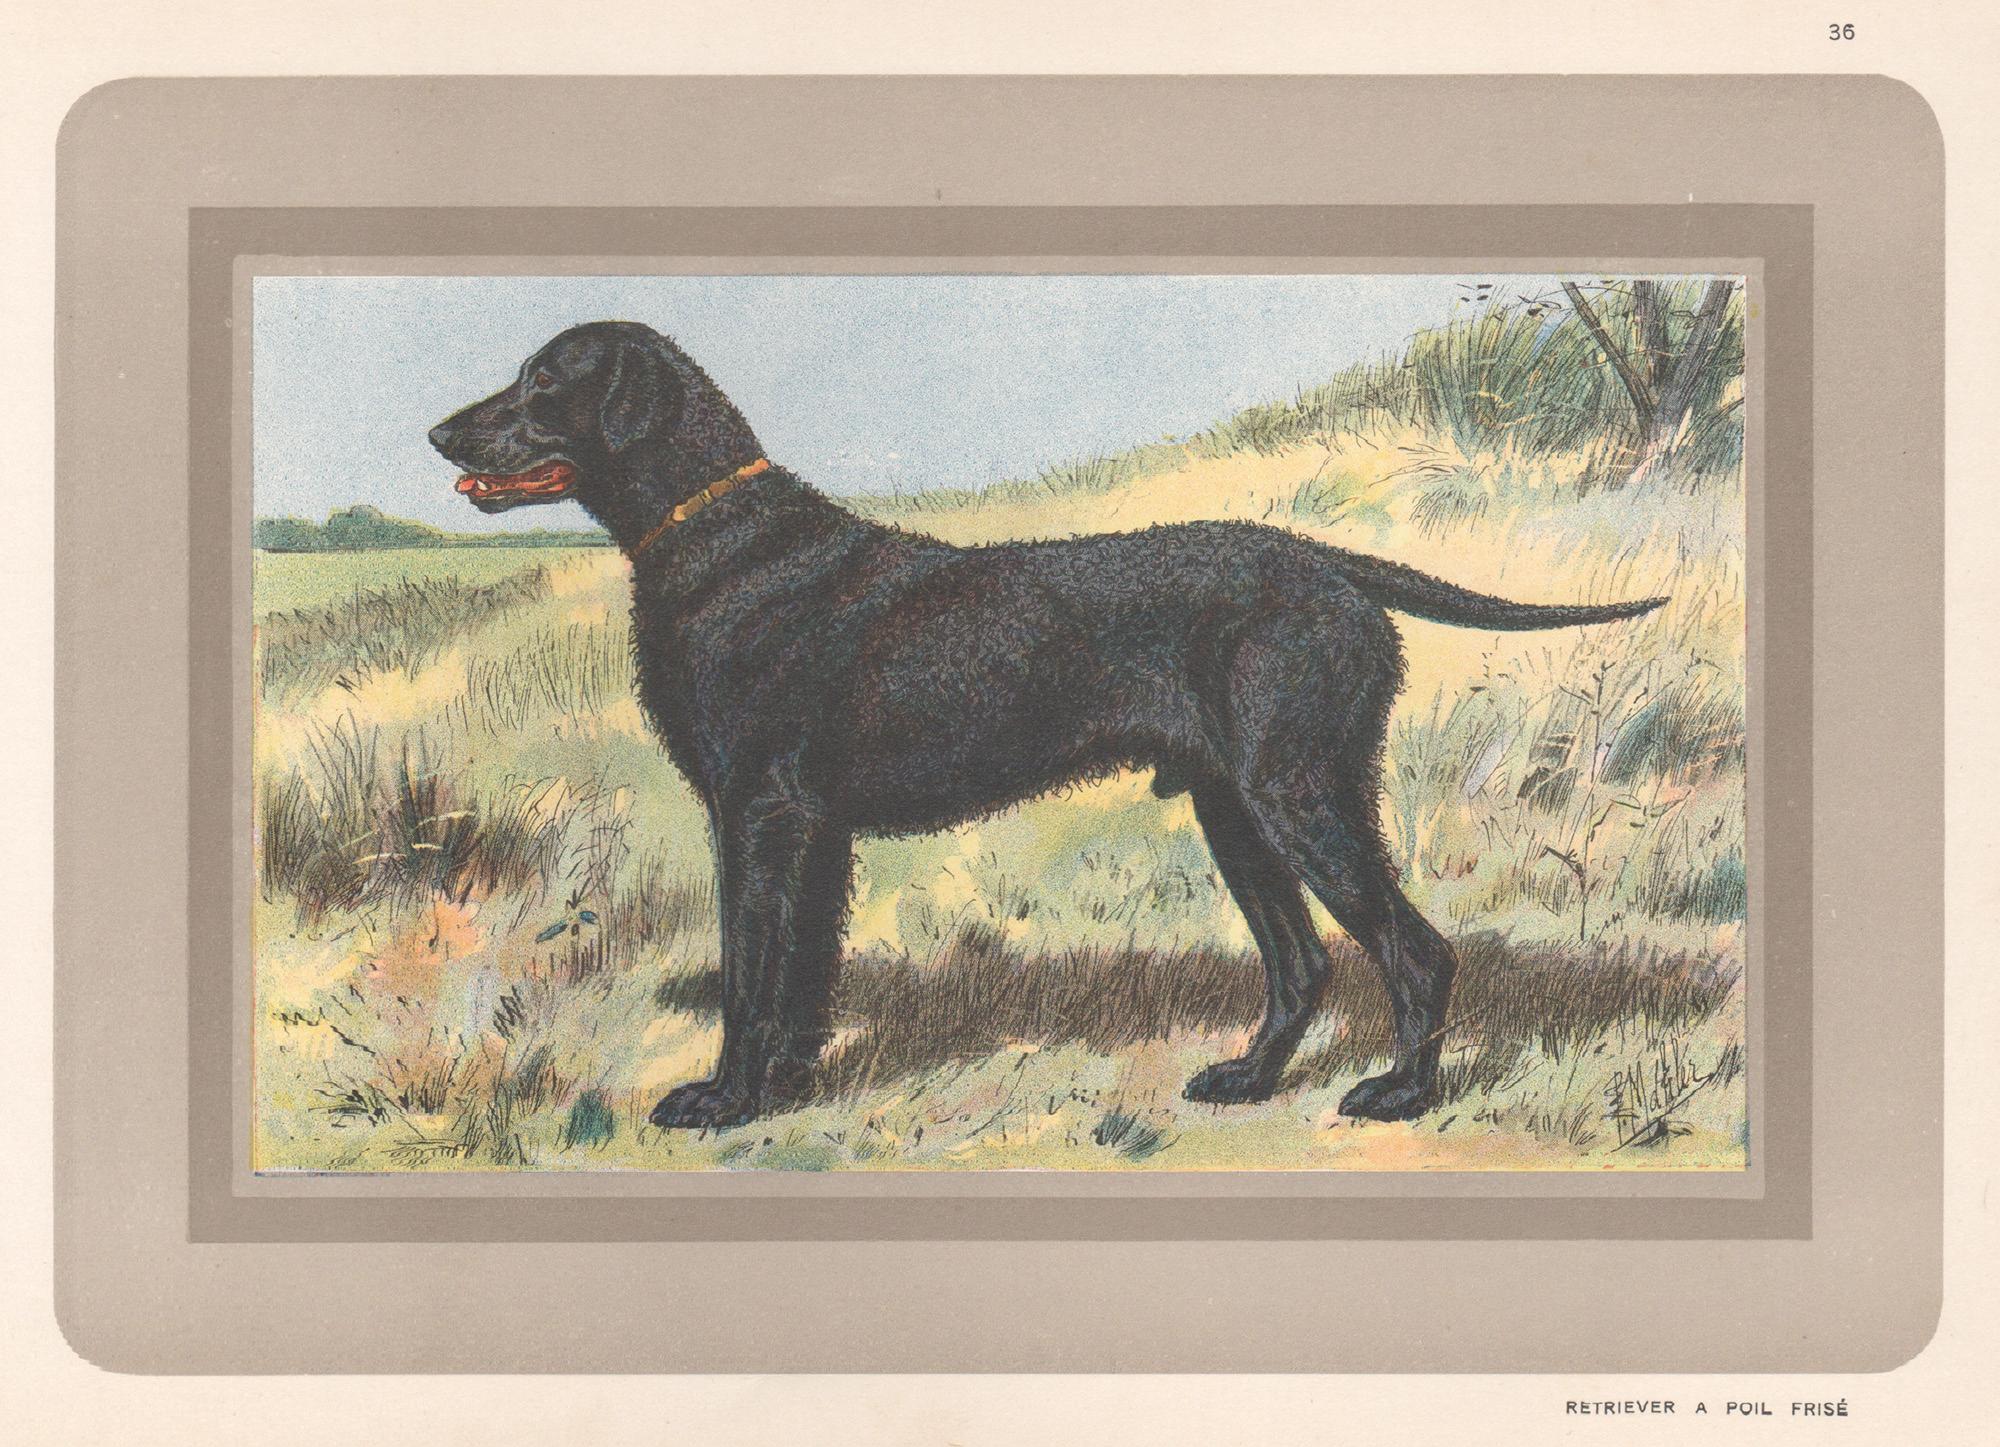 P. Mahler Animal Print - Curly Coated Retriever, French hound dog chromolithograph print, 1930s